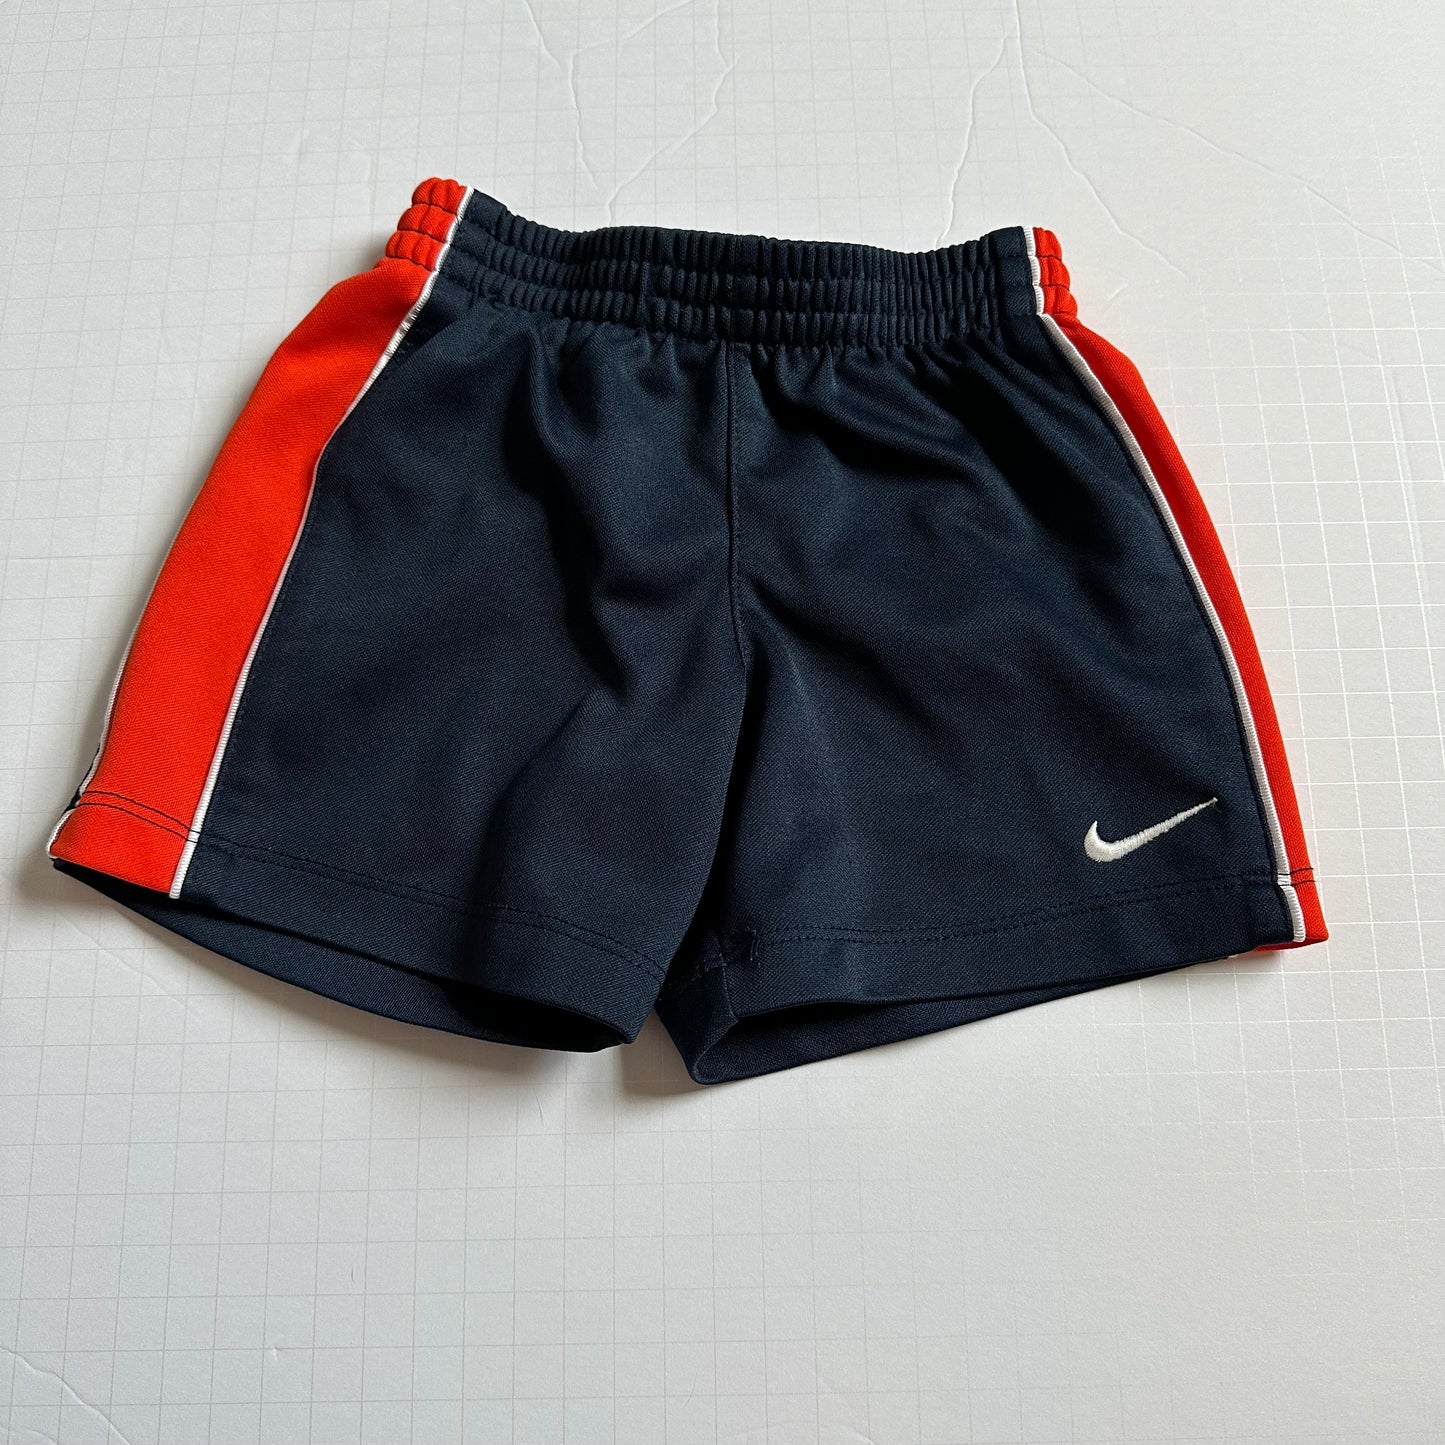 18M Nike Navy/Orange Shorts